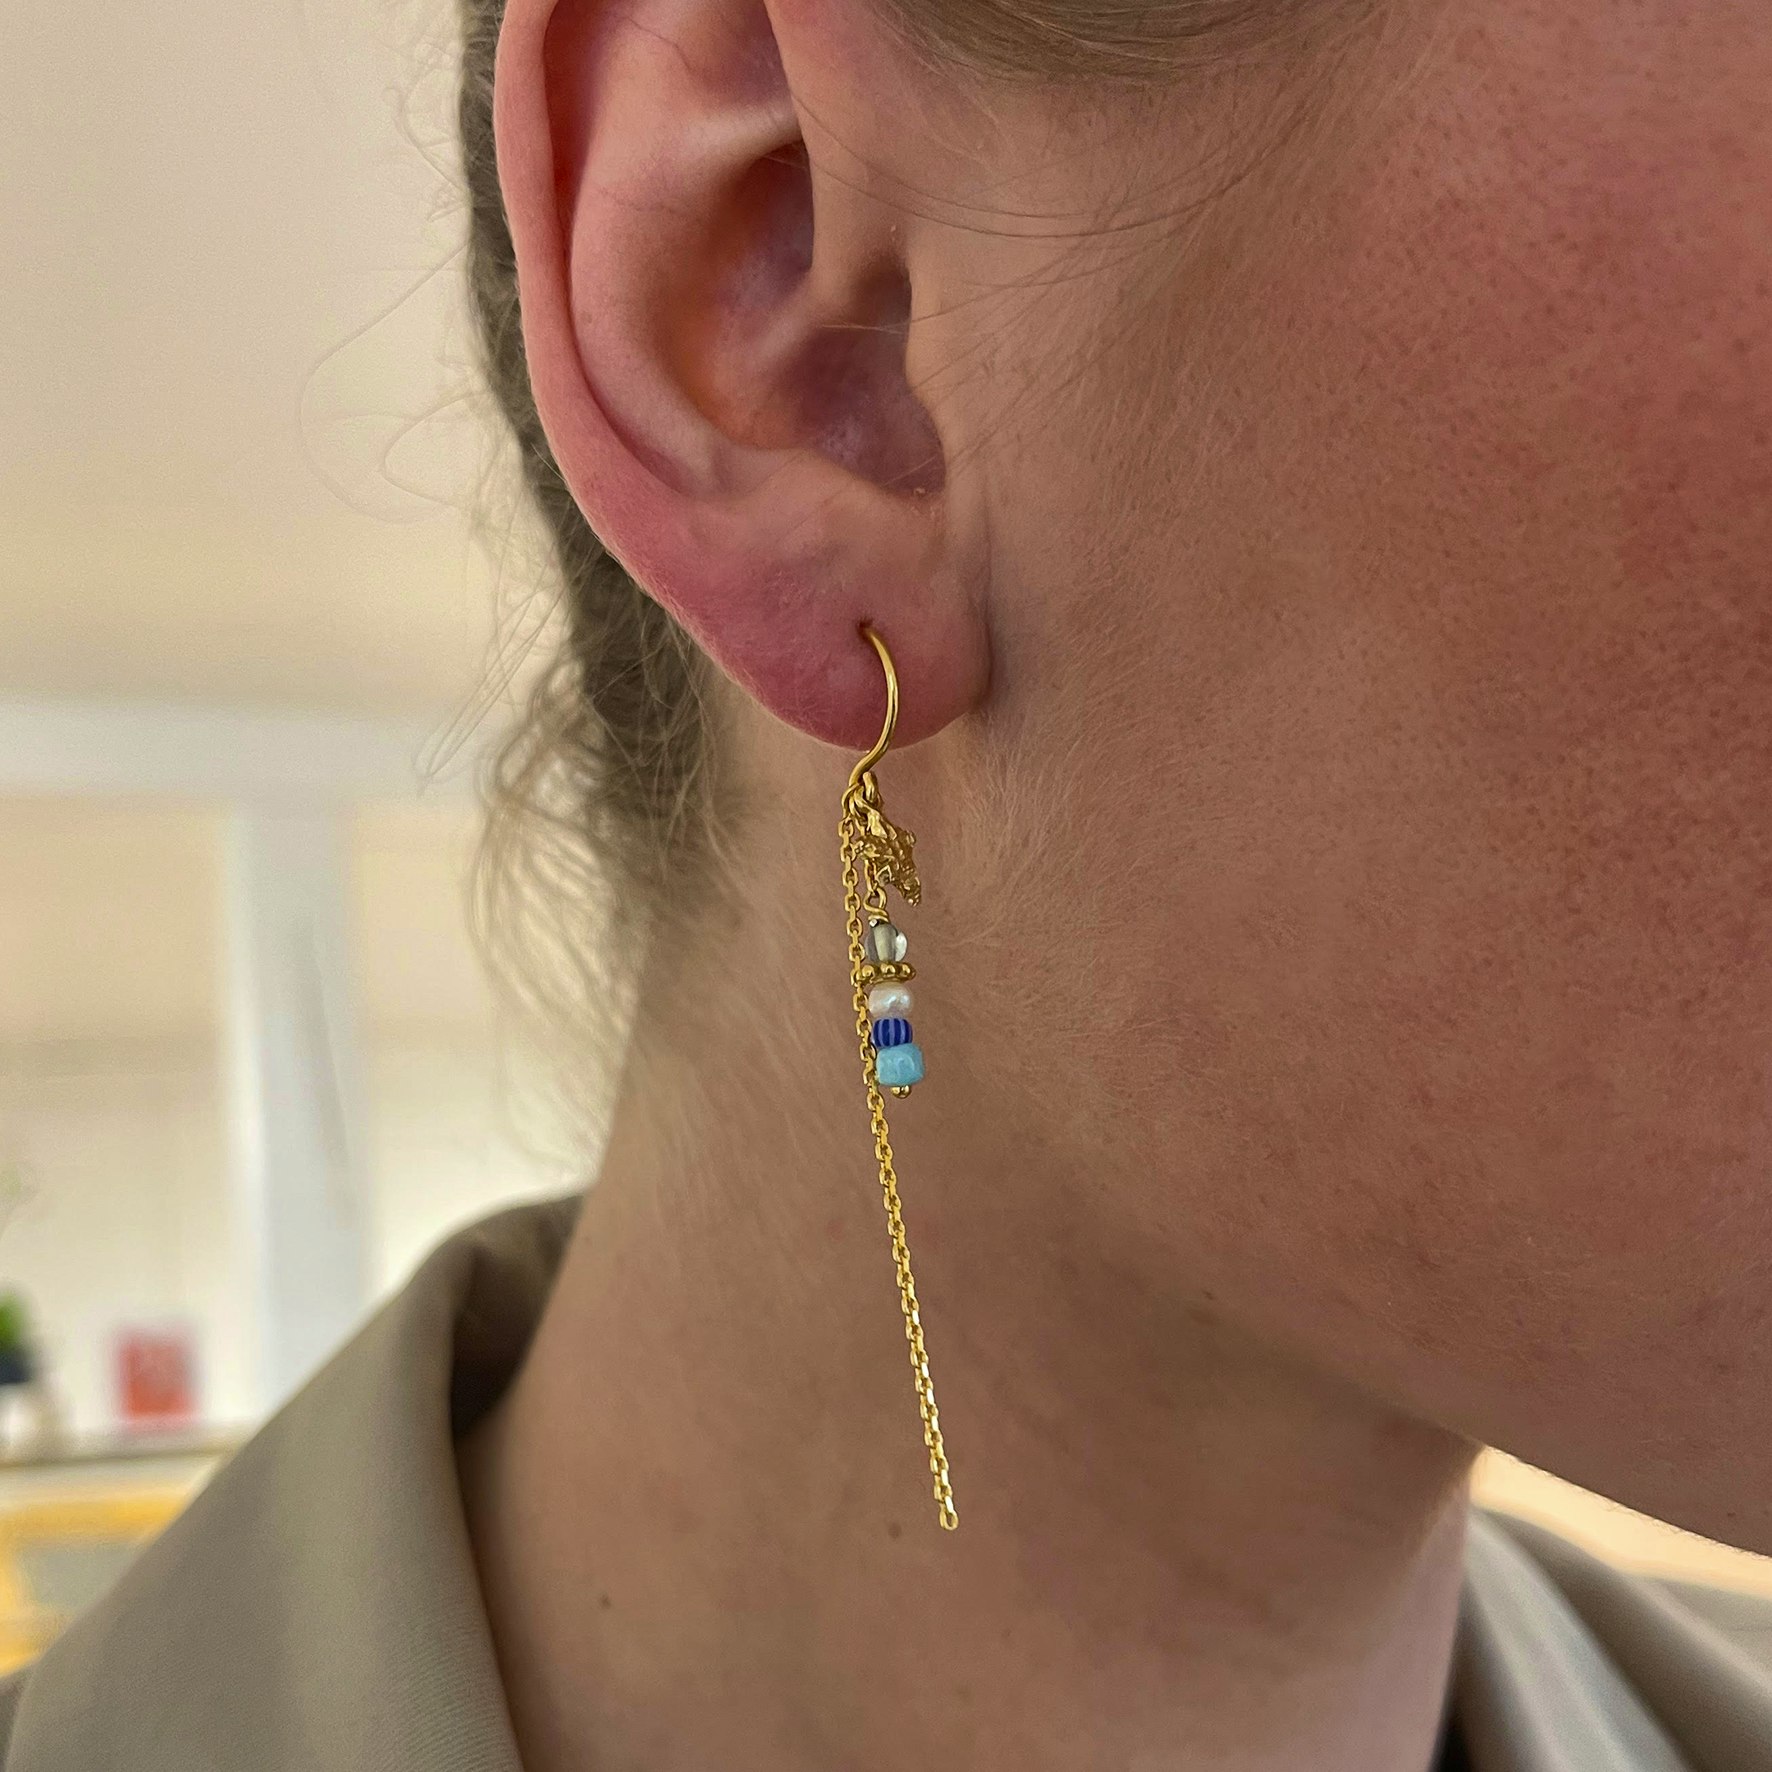 Beach Starfish Earrings from Sistie in Silver Sterling 925